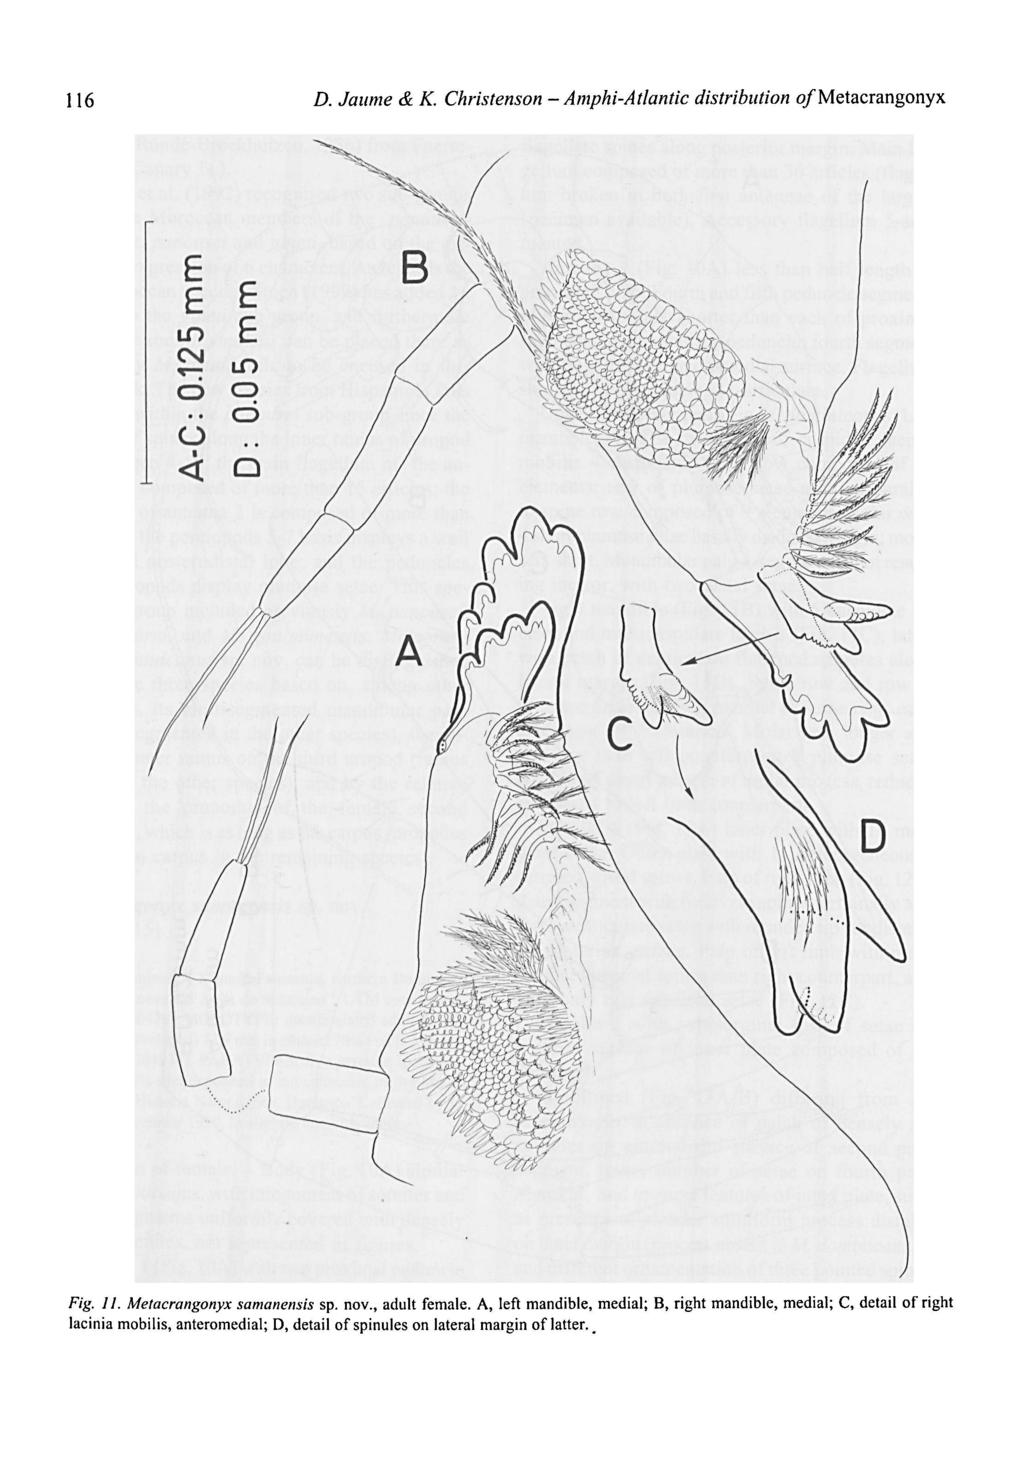 Amphi-Atlantic 1 16 D. Jaume & K. Christenson - distribution of Metacrangonyx Fig. II. Metacrangonyx samanensis sp. nov., adult female.